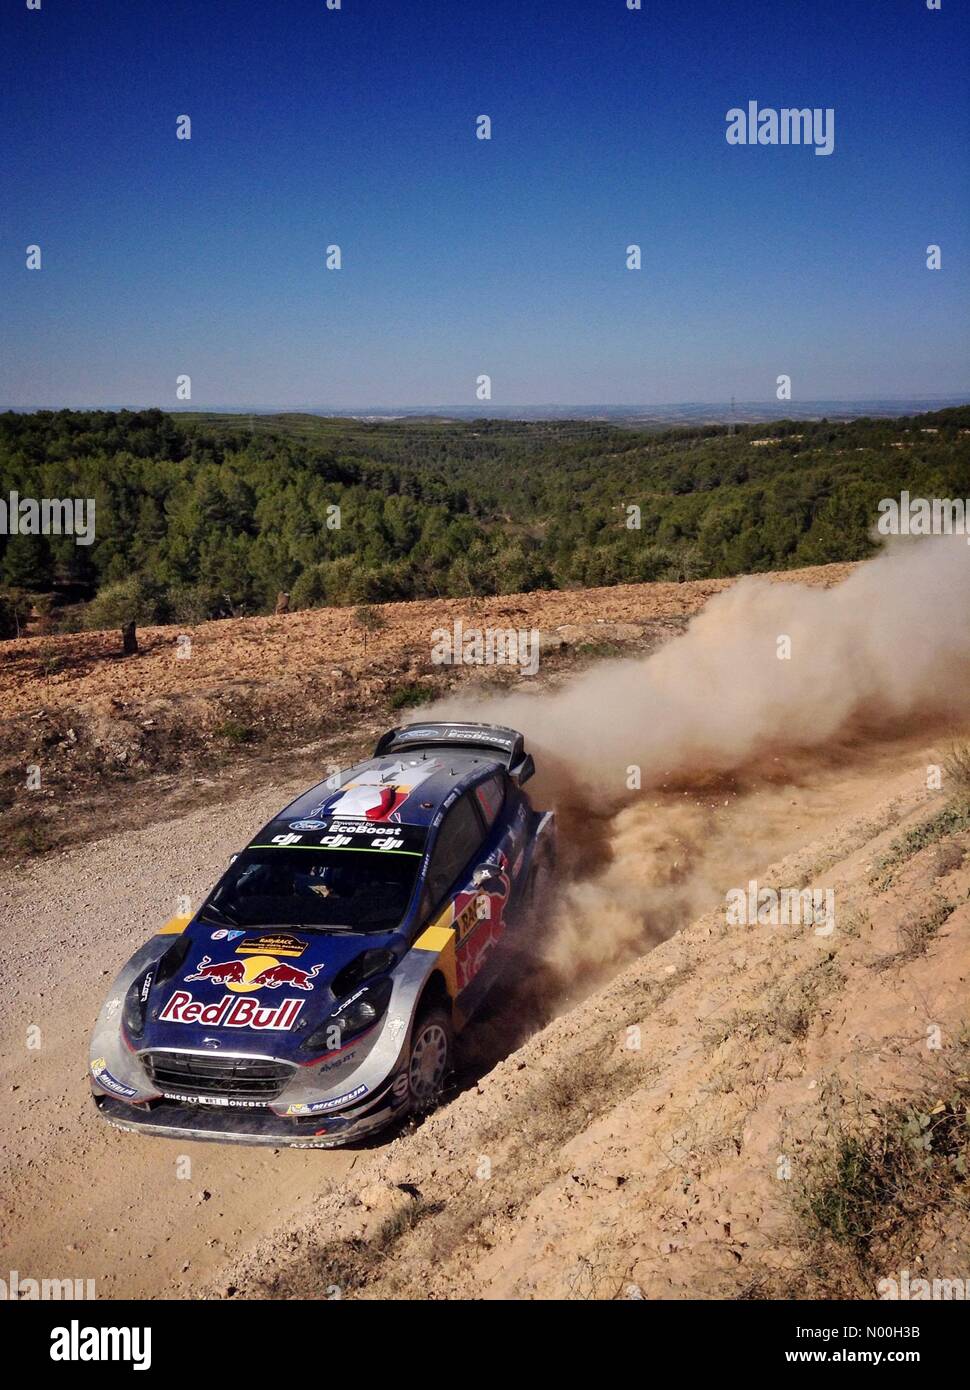 SPORT: WRC RallyRACC Catalunya / Rally de España 2017. Special Stage SS3 - Terra Alta 1, Sébastien Ogier / Julien Ingrassia in their Ford Fiesta WRC rally car, Catalonia, SPAIN. 06/10/2017 Stock Photo